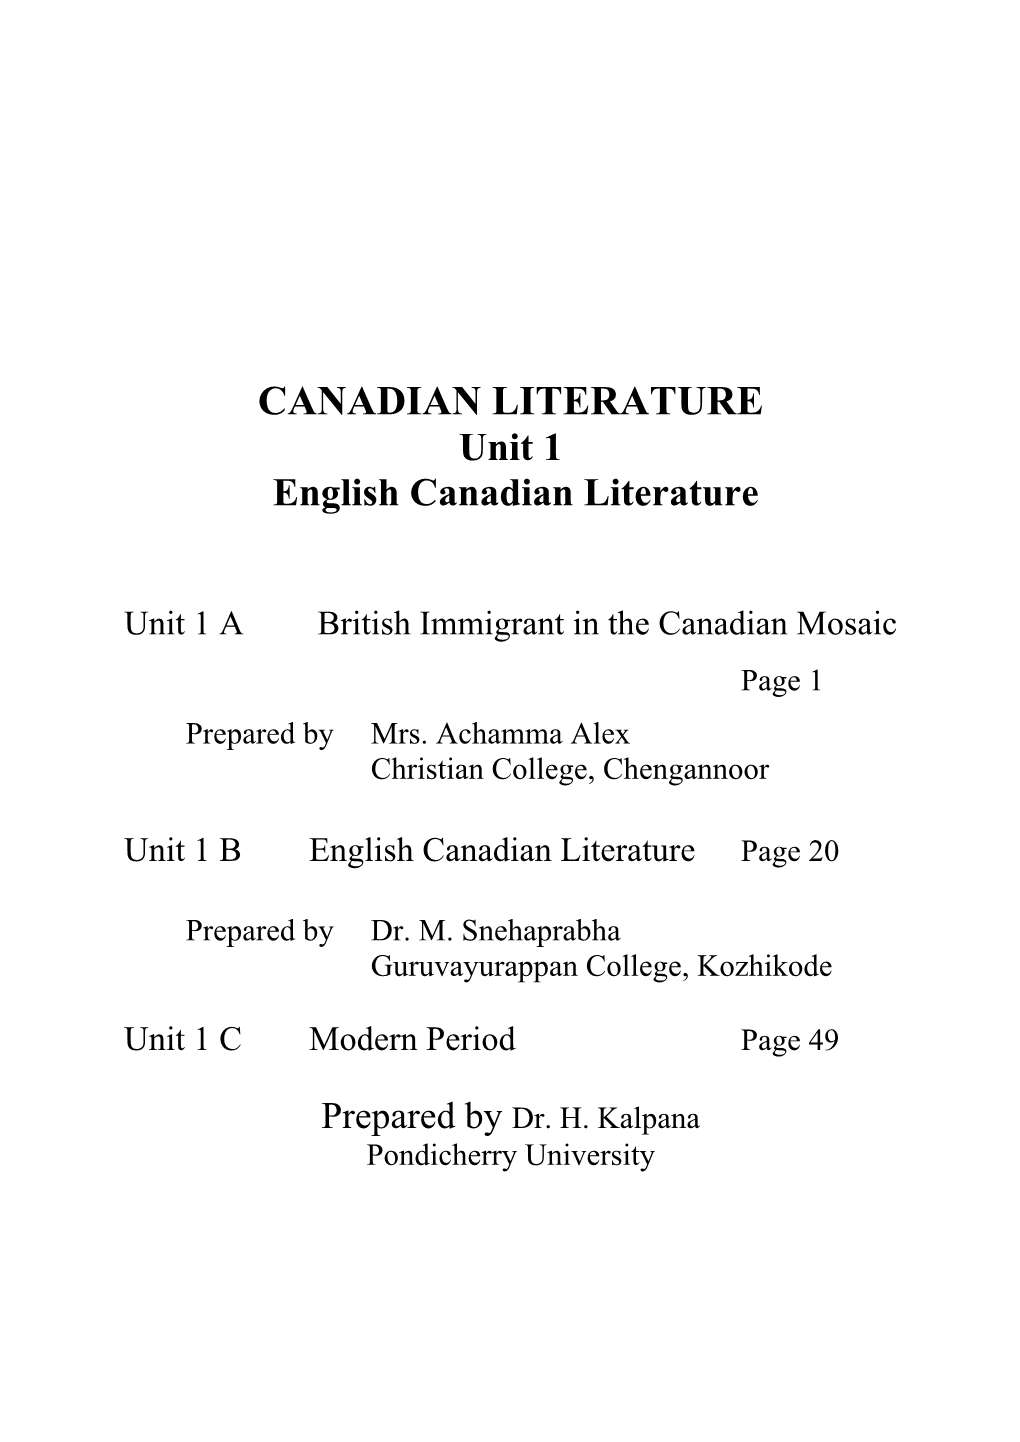 Unit 1 English Canadian Literature